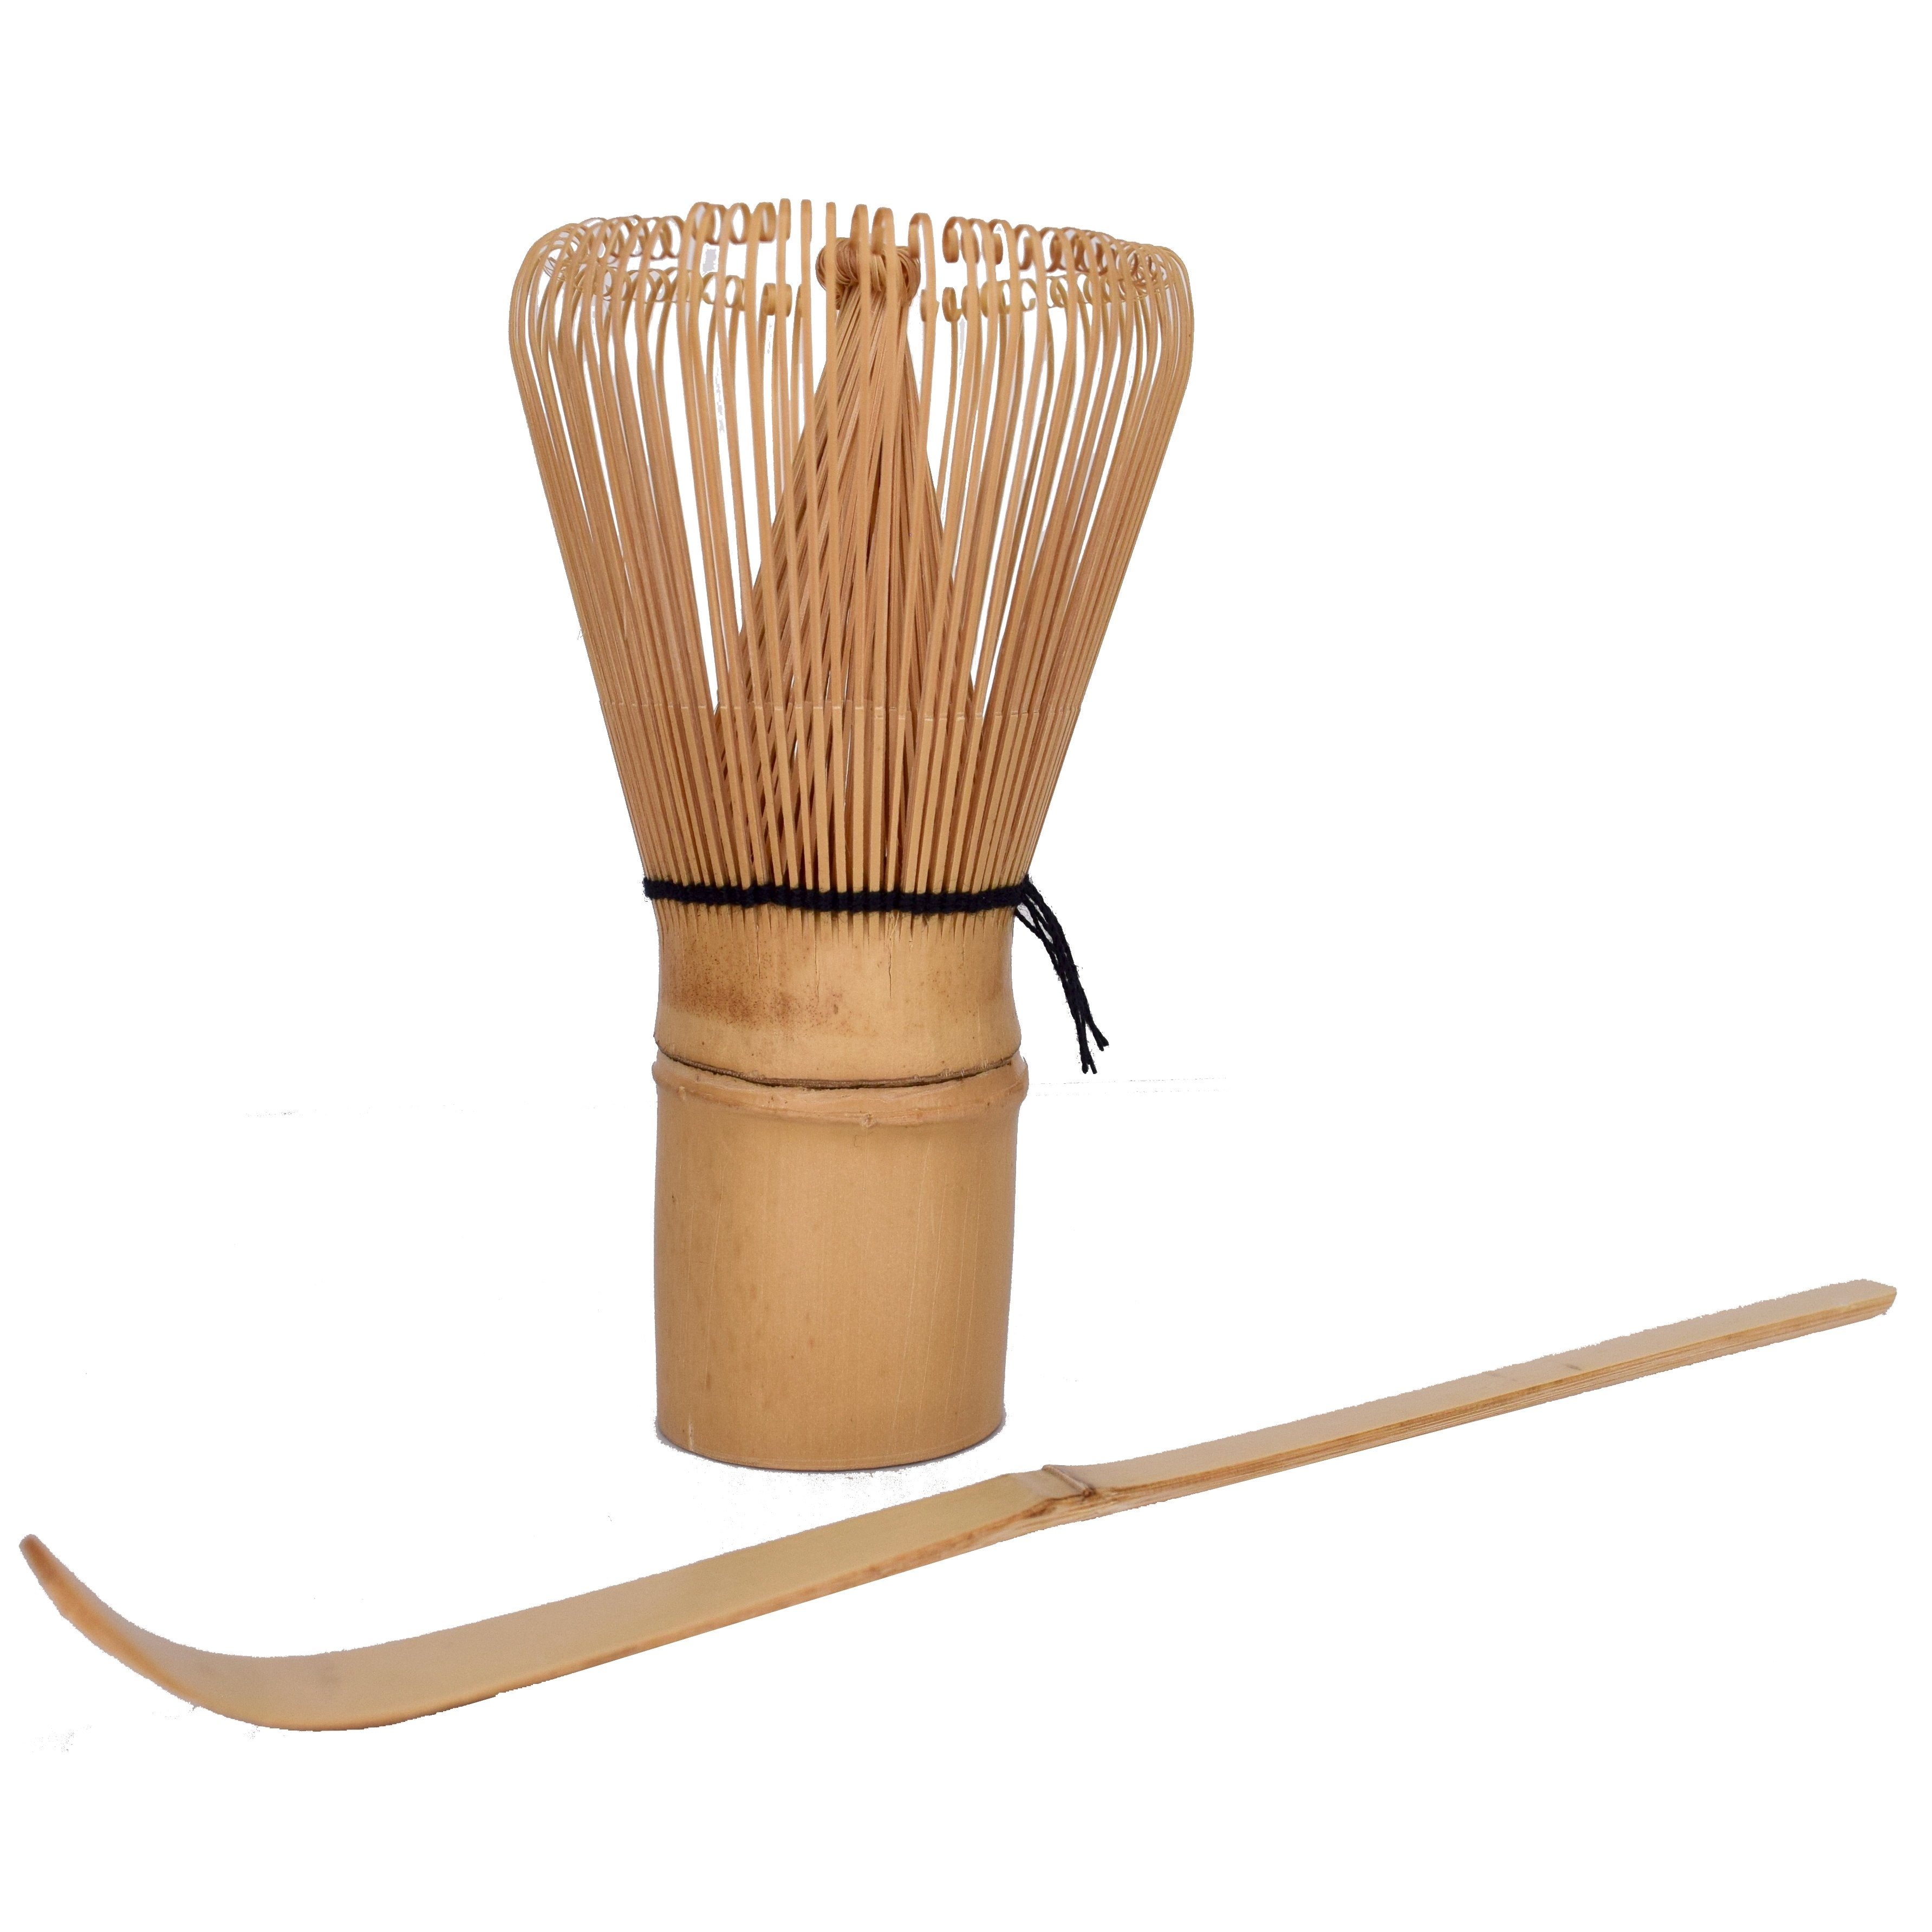 Matcha Set Consisting of Broom, Bowl, Spoon and Broom Holder